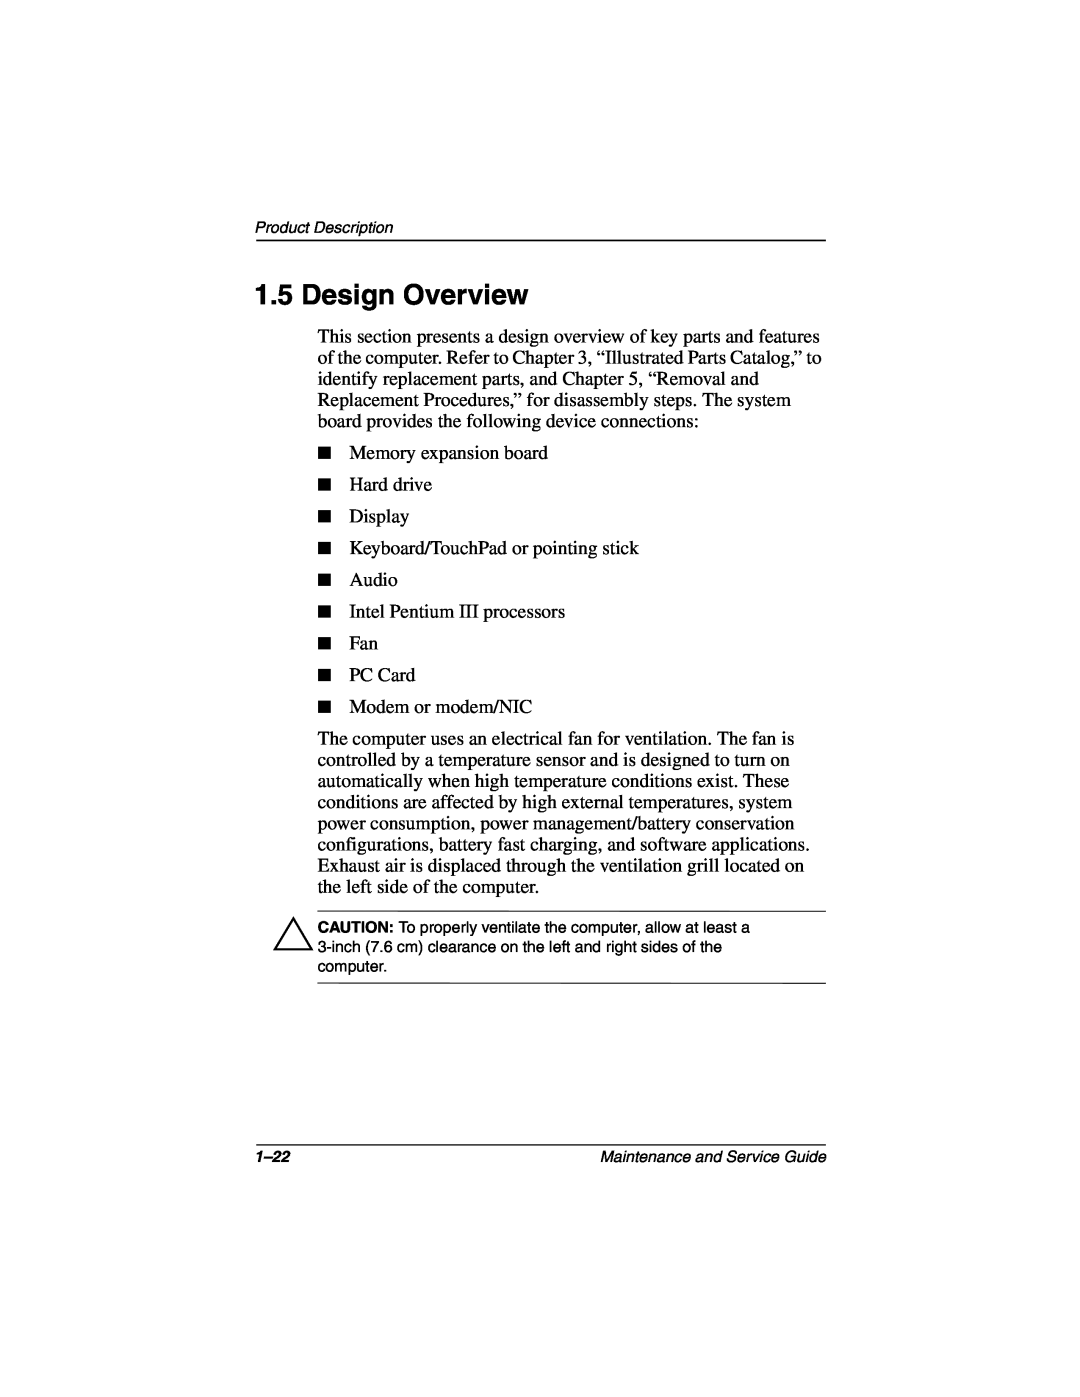 Compaq N160 manual Design Overview 